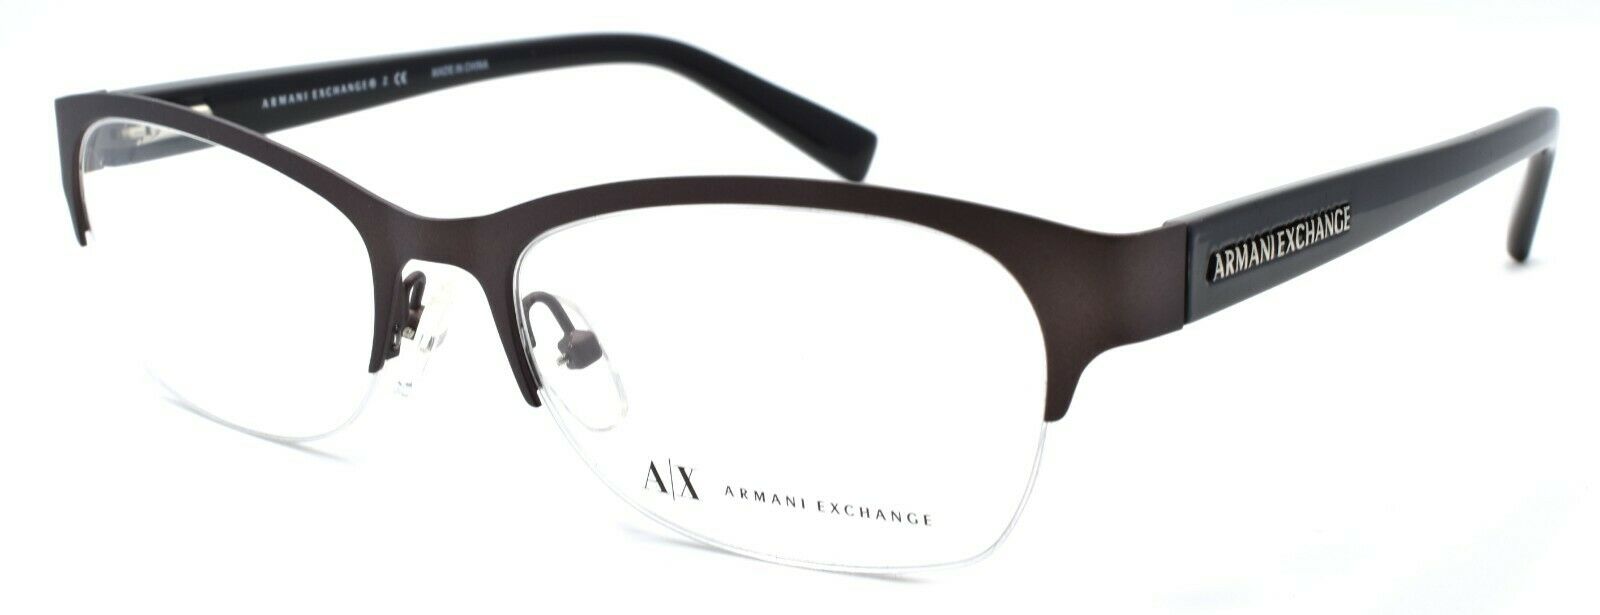 1-Armani Exchange AX1016 6074 Women's Glasses Frames Half-rim 53-17-140 Gunmetal-8053672412338-IKSpecs